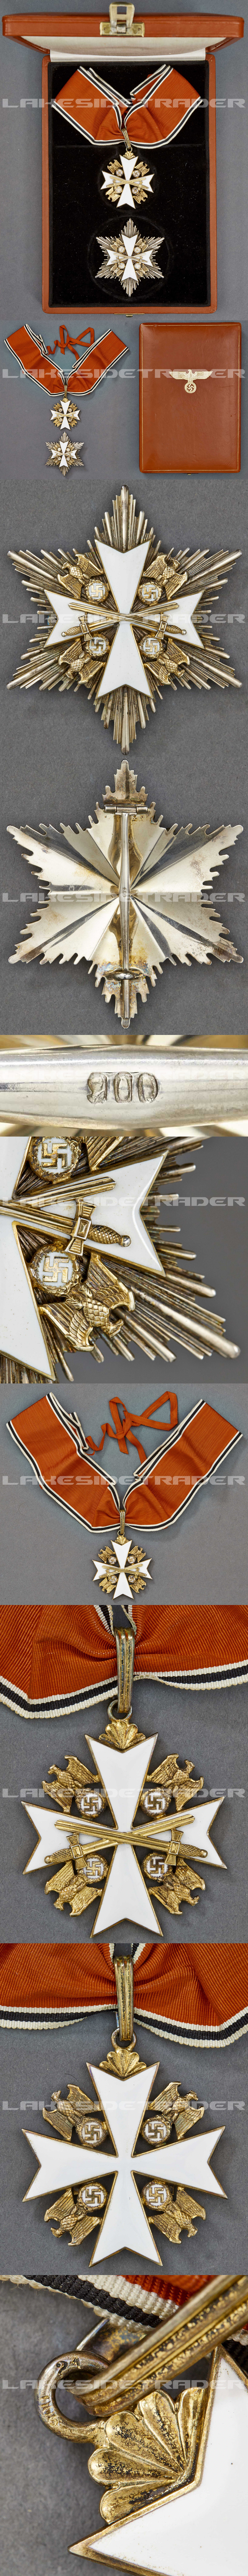 A Cased 1939 Order of the German Eagle Neck Cross & Star w Swords by Godet